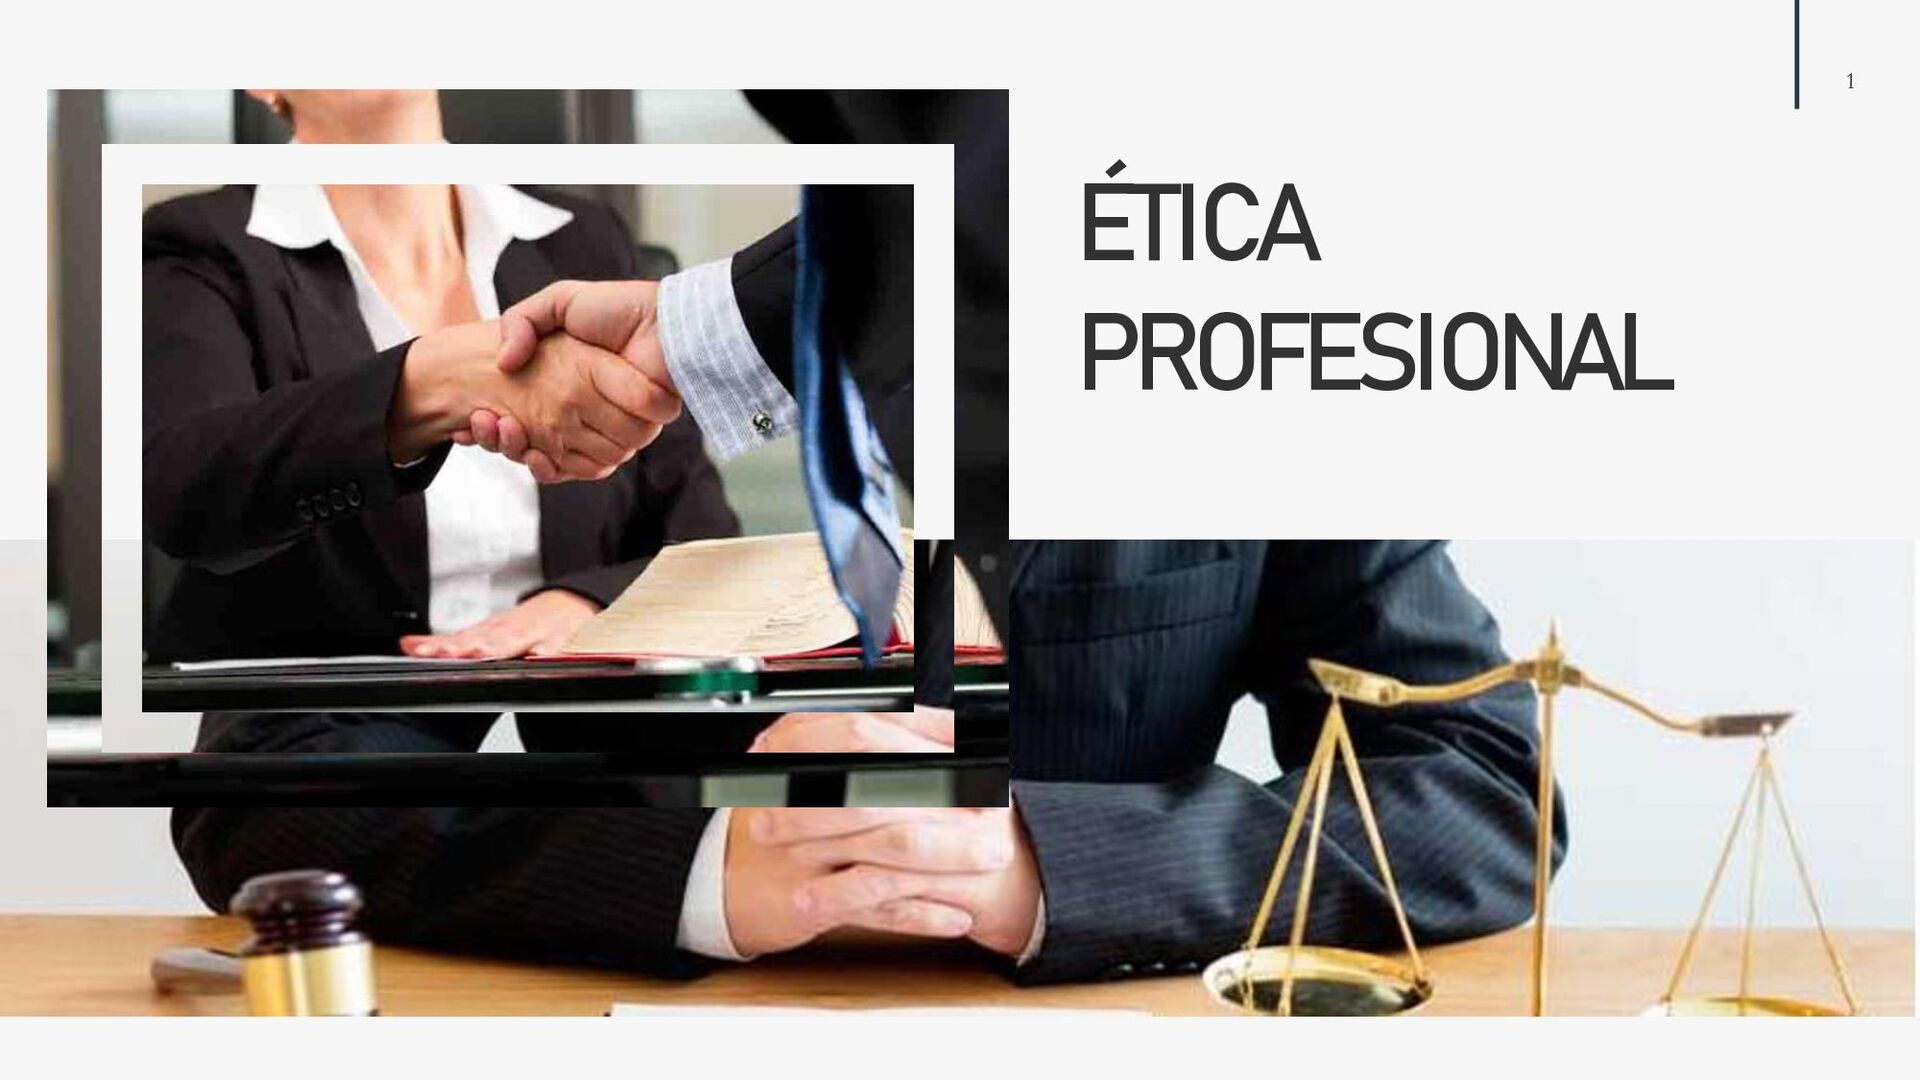 Ética Profesional Speaker Deck 9635